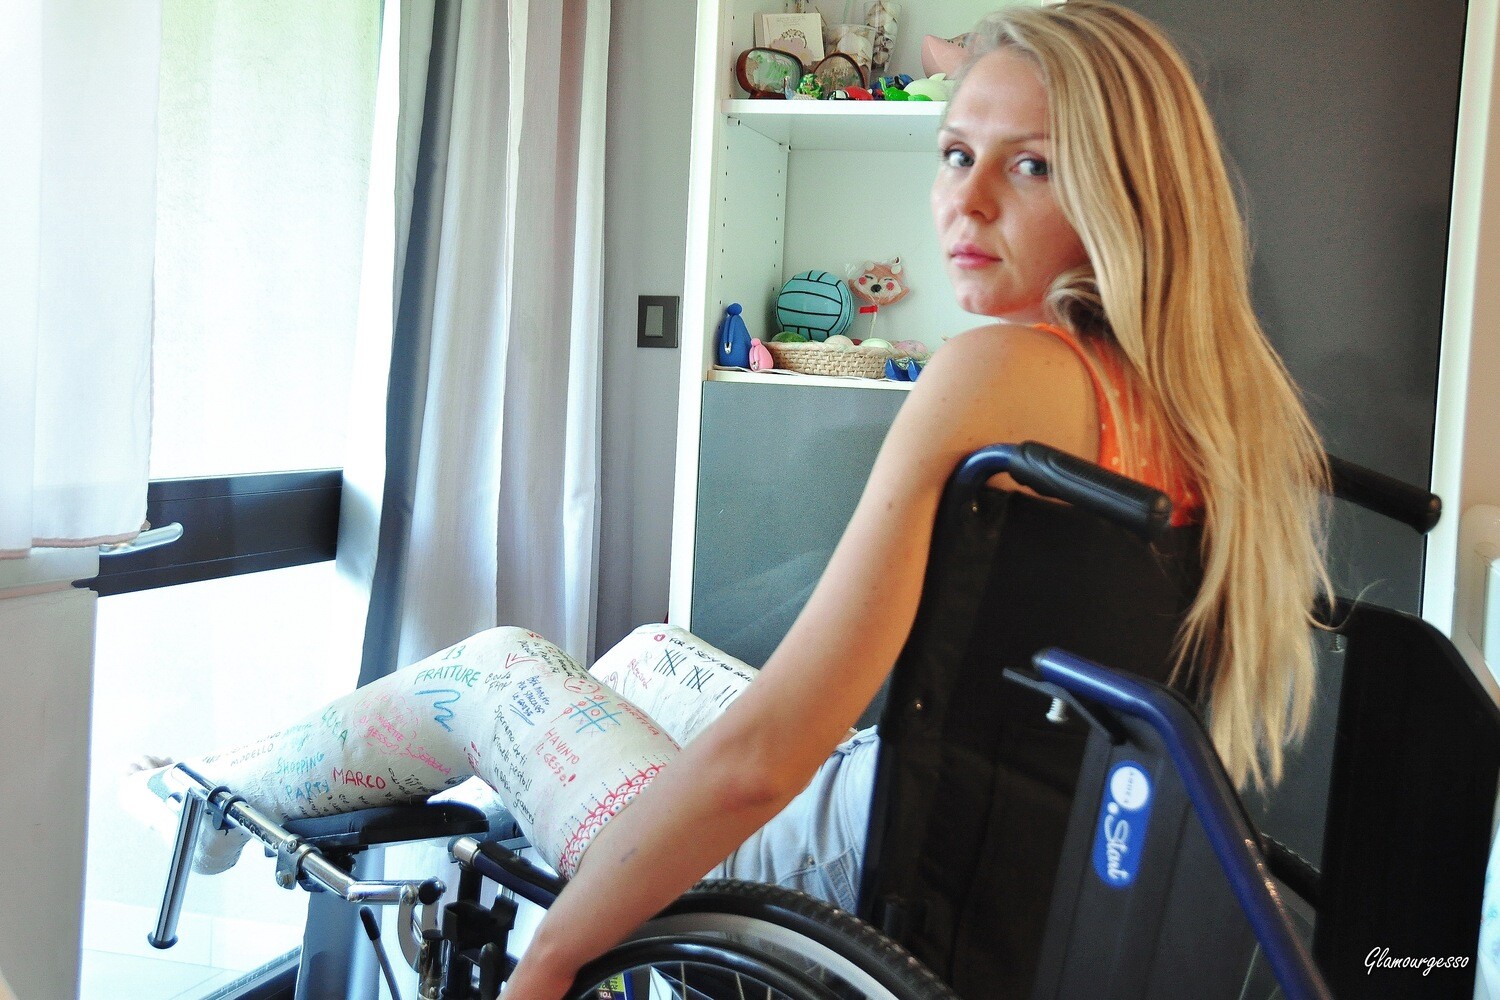 Svitlana DLLC - VIDEO 05: Ready to go wheelchairing